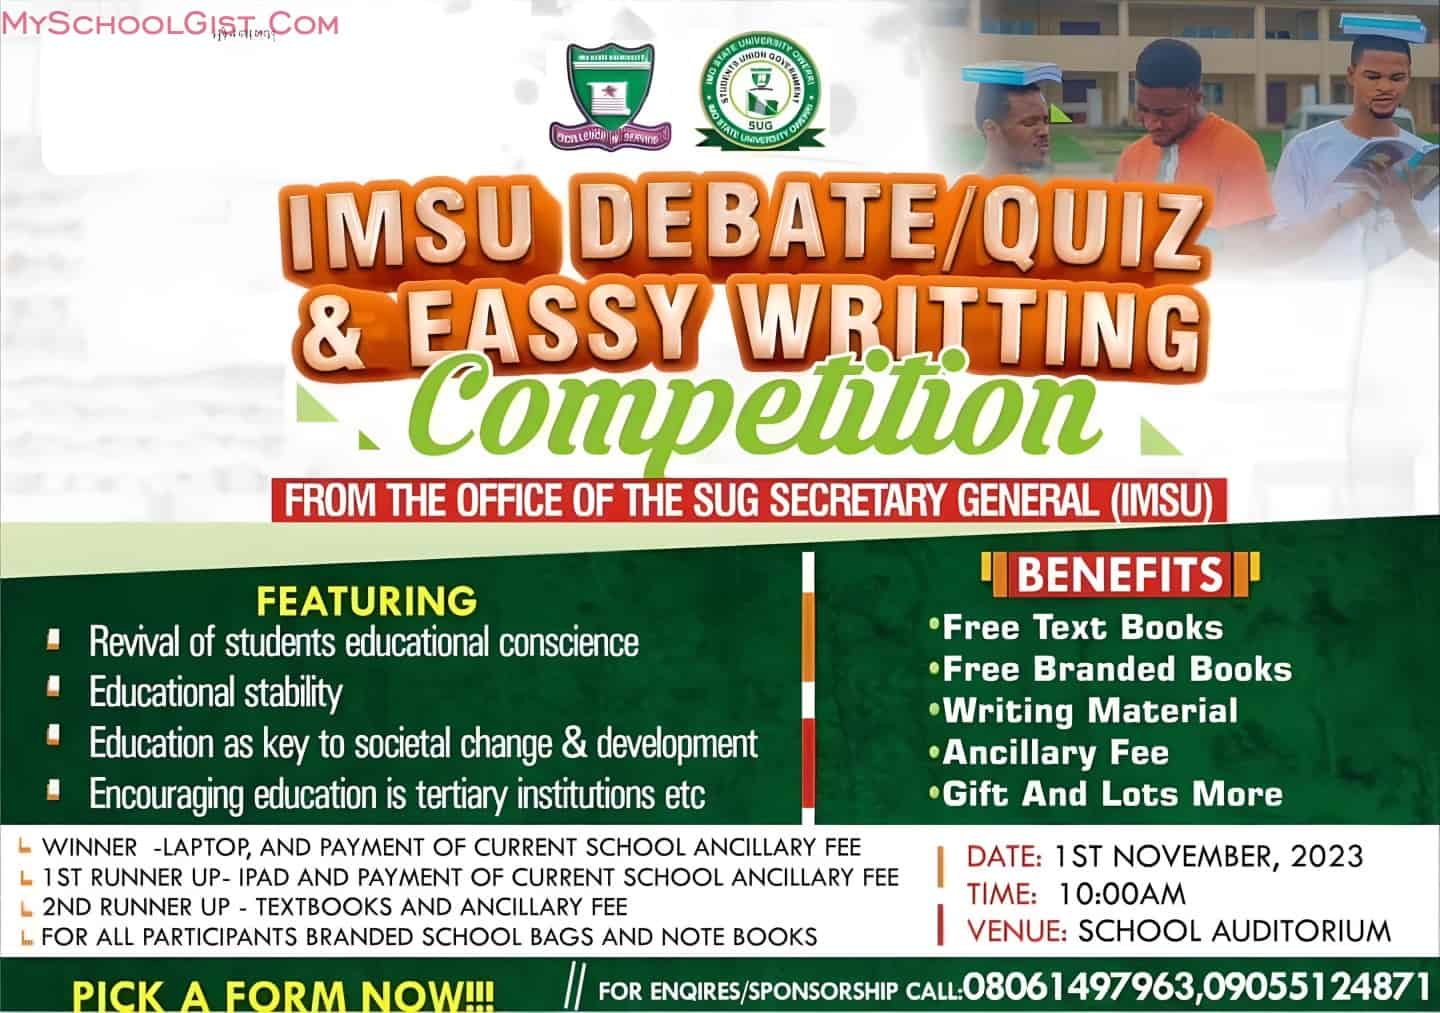 IMSU Debate/Quiz & Essay Writing Competition 2023